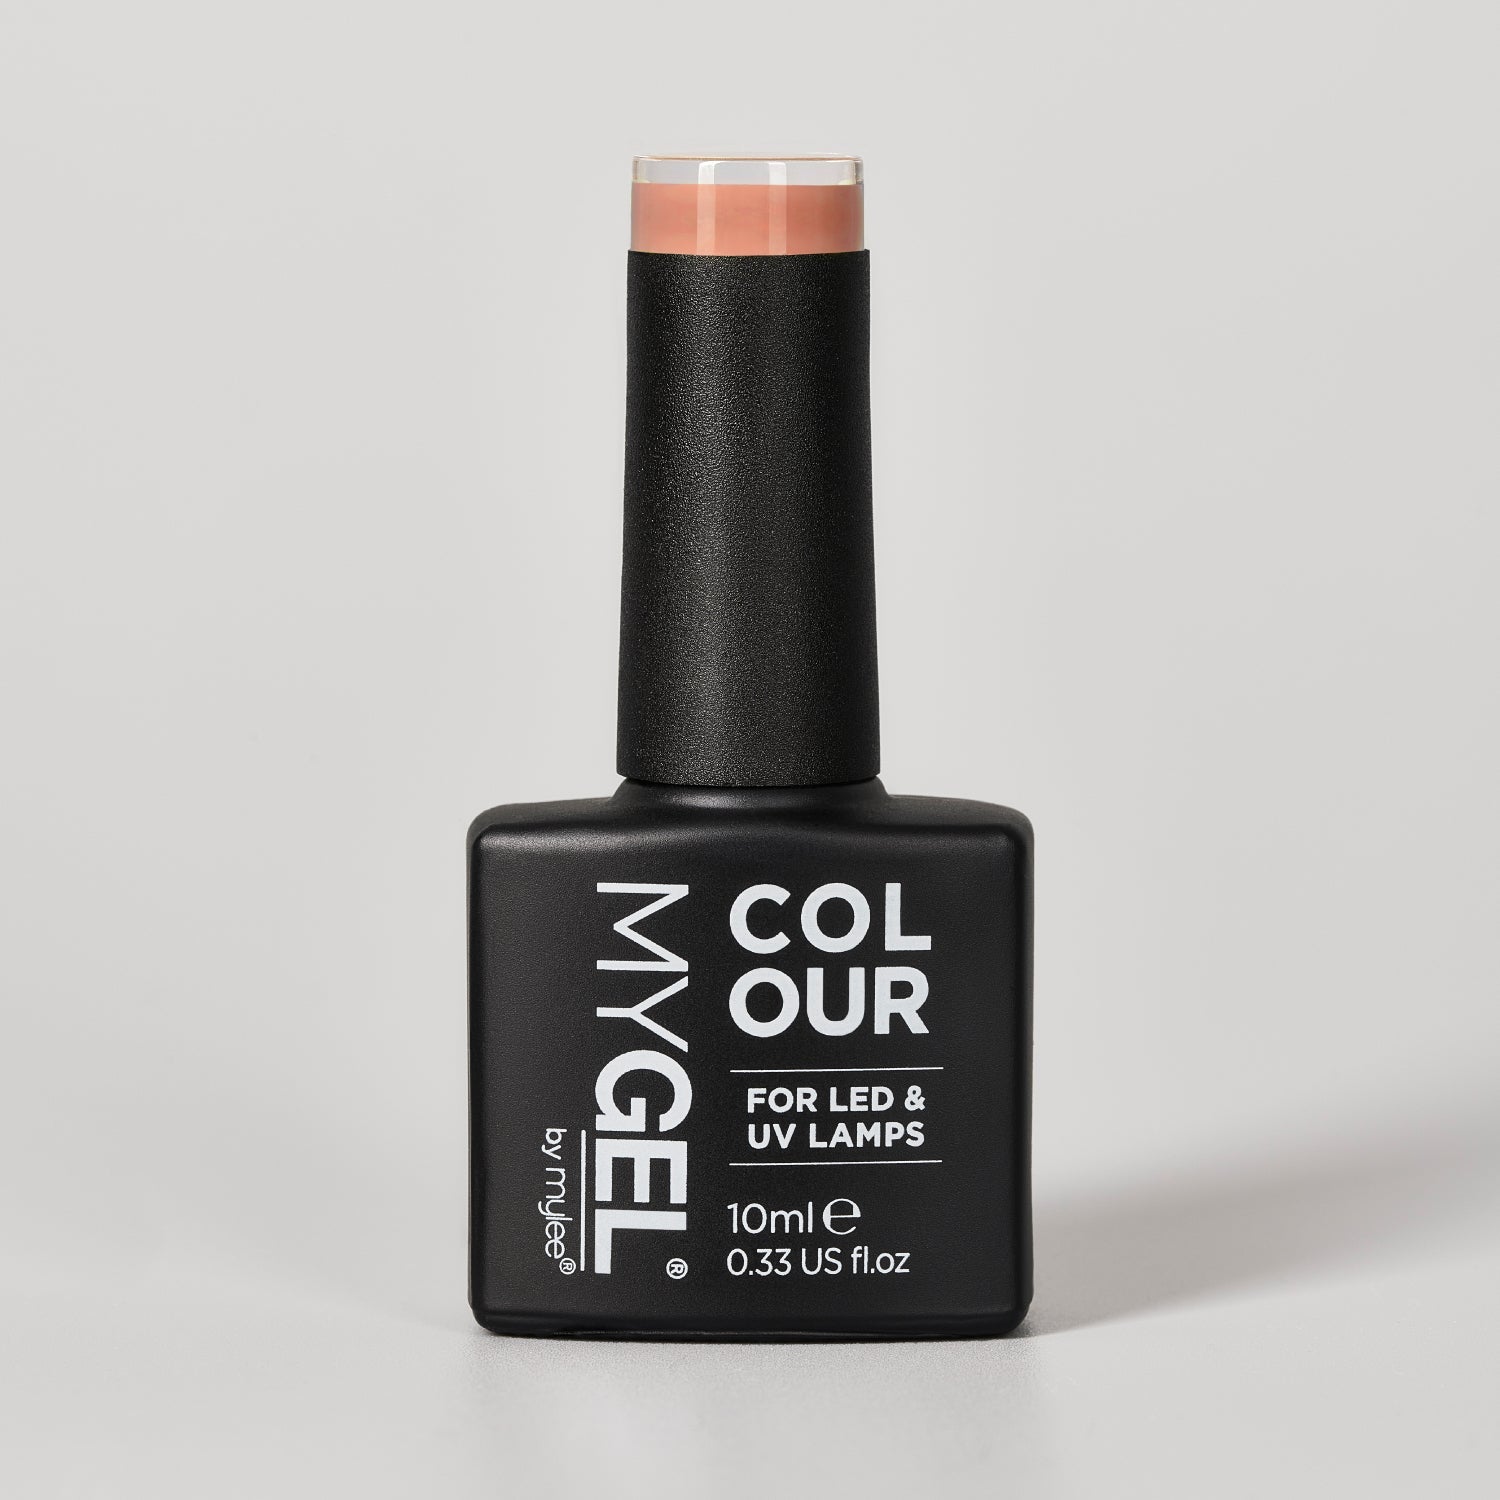 Mylee Caramel LED/UV Nude Gel Nail Polish 10ml – Long Lasting At Home Manicure/Pedicure, High Gloss And Chip Free Wear Nail Varnish